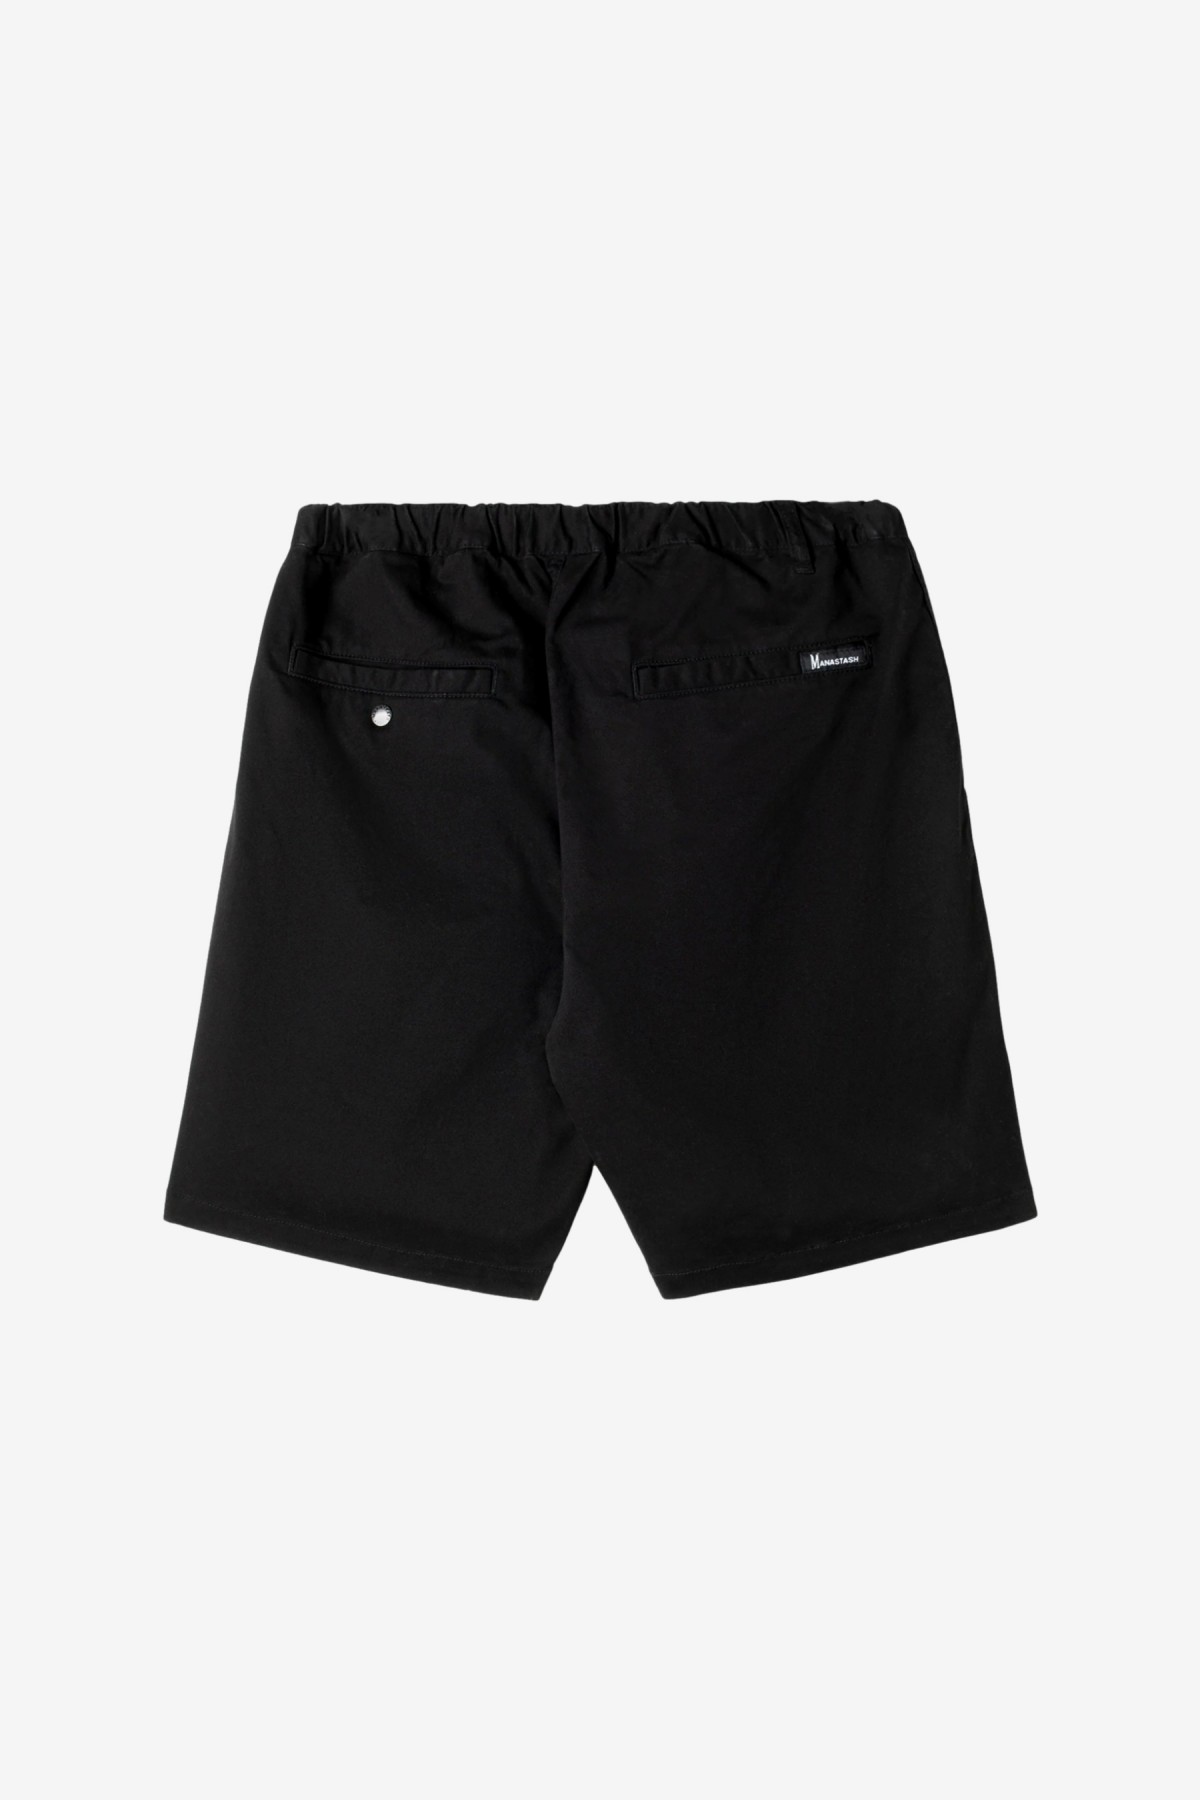 Manastash Flex Climber Wide Shorts in Black